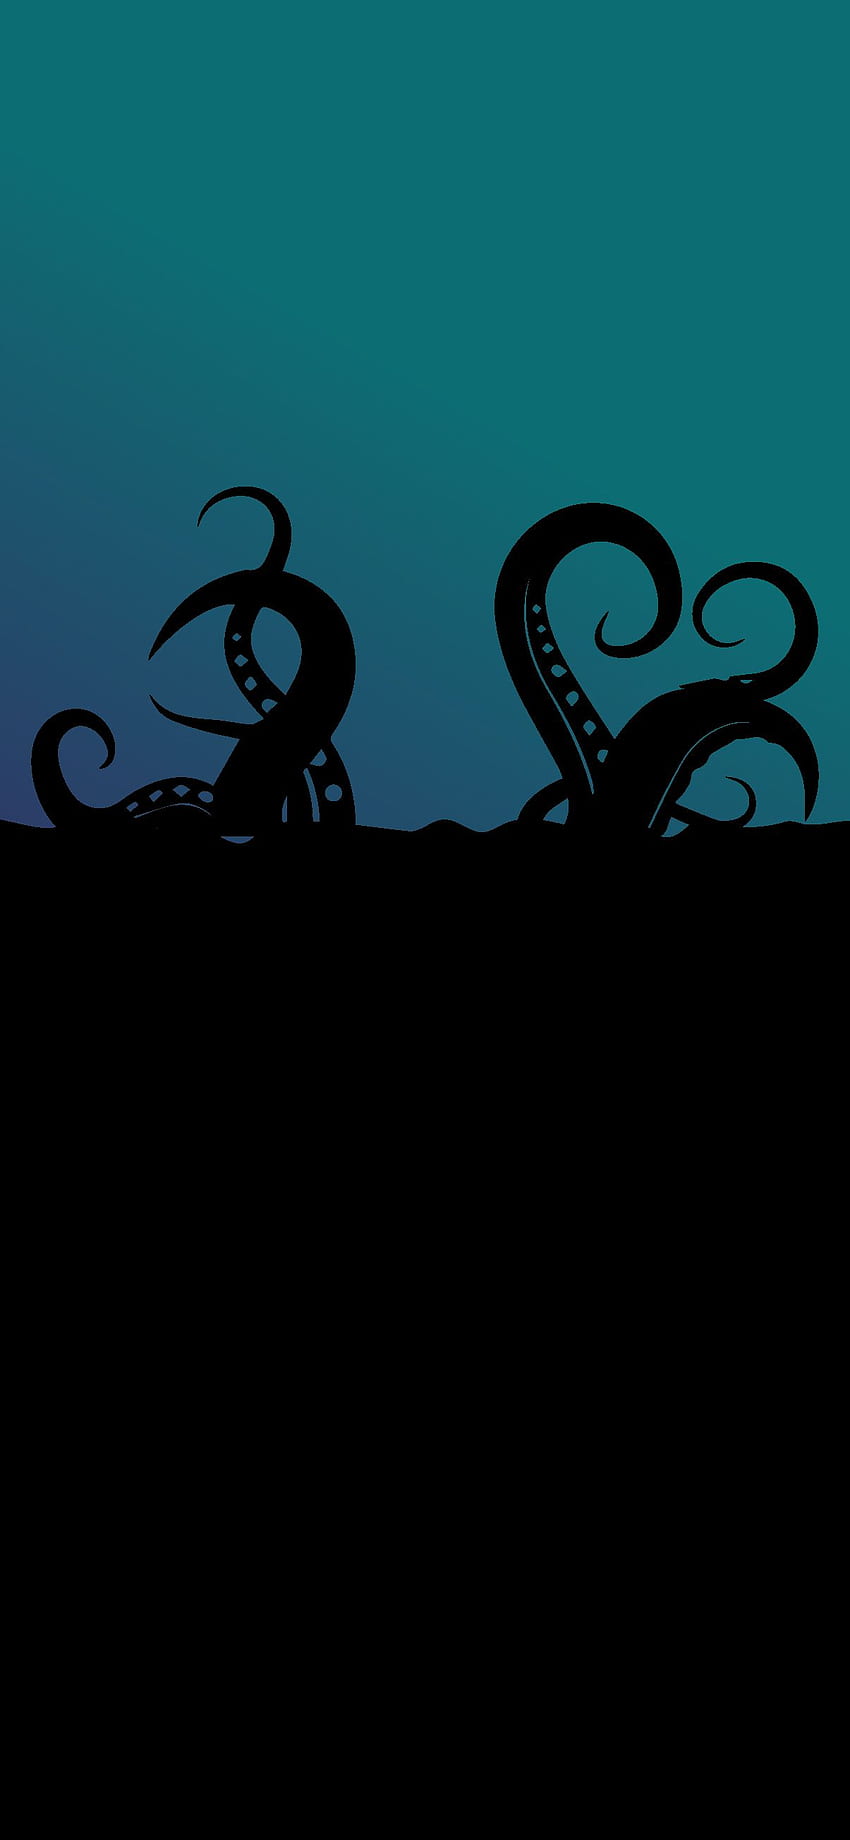 Aesthetic octopus wallpaper iPhone